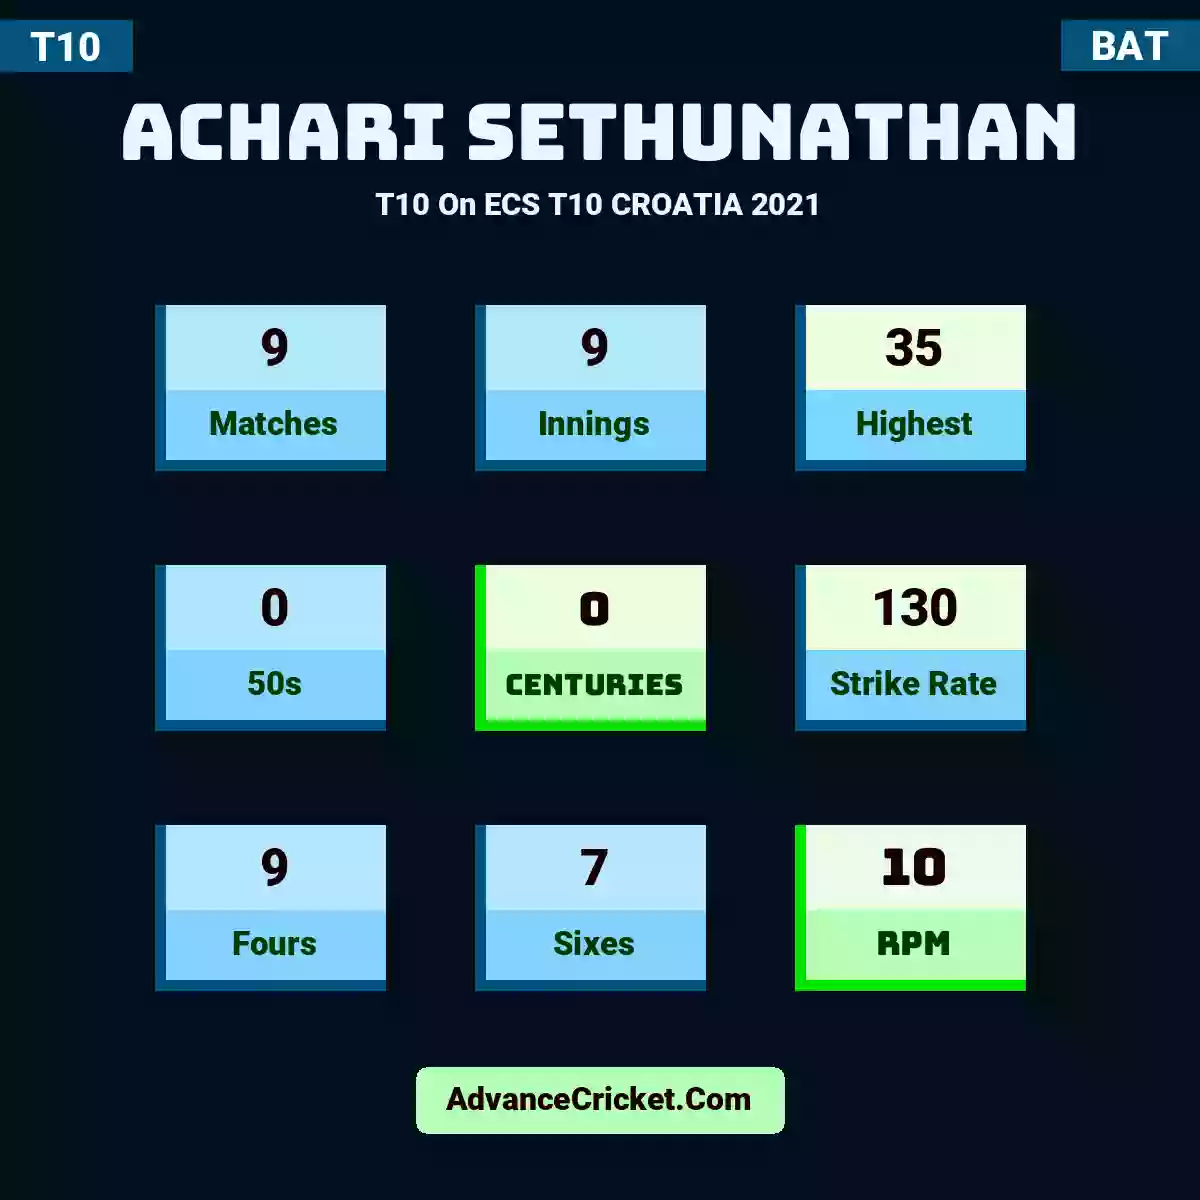 Achari Sethunathan T10  On ECS T10 CROATIA 2021, Achari Sethunathan played 9 matches, scored 35 runs as highest, 0 half-centuries, and 0 centuries, with a strike rate of 130. A.Sethunathan hit 9 fours and 7 sixes, with an RPM of 10.